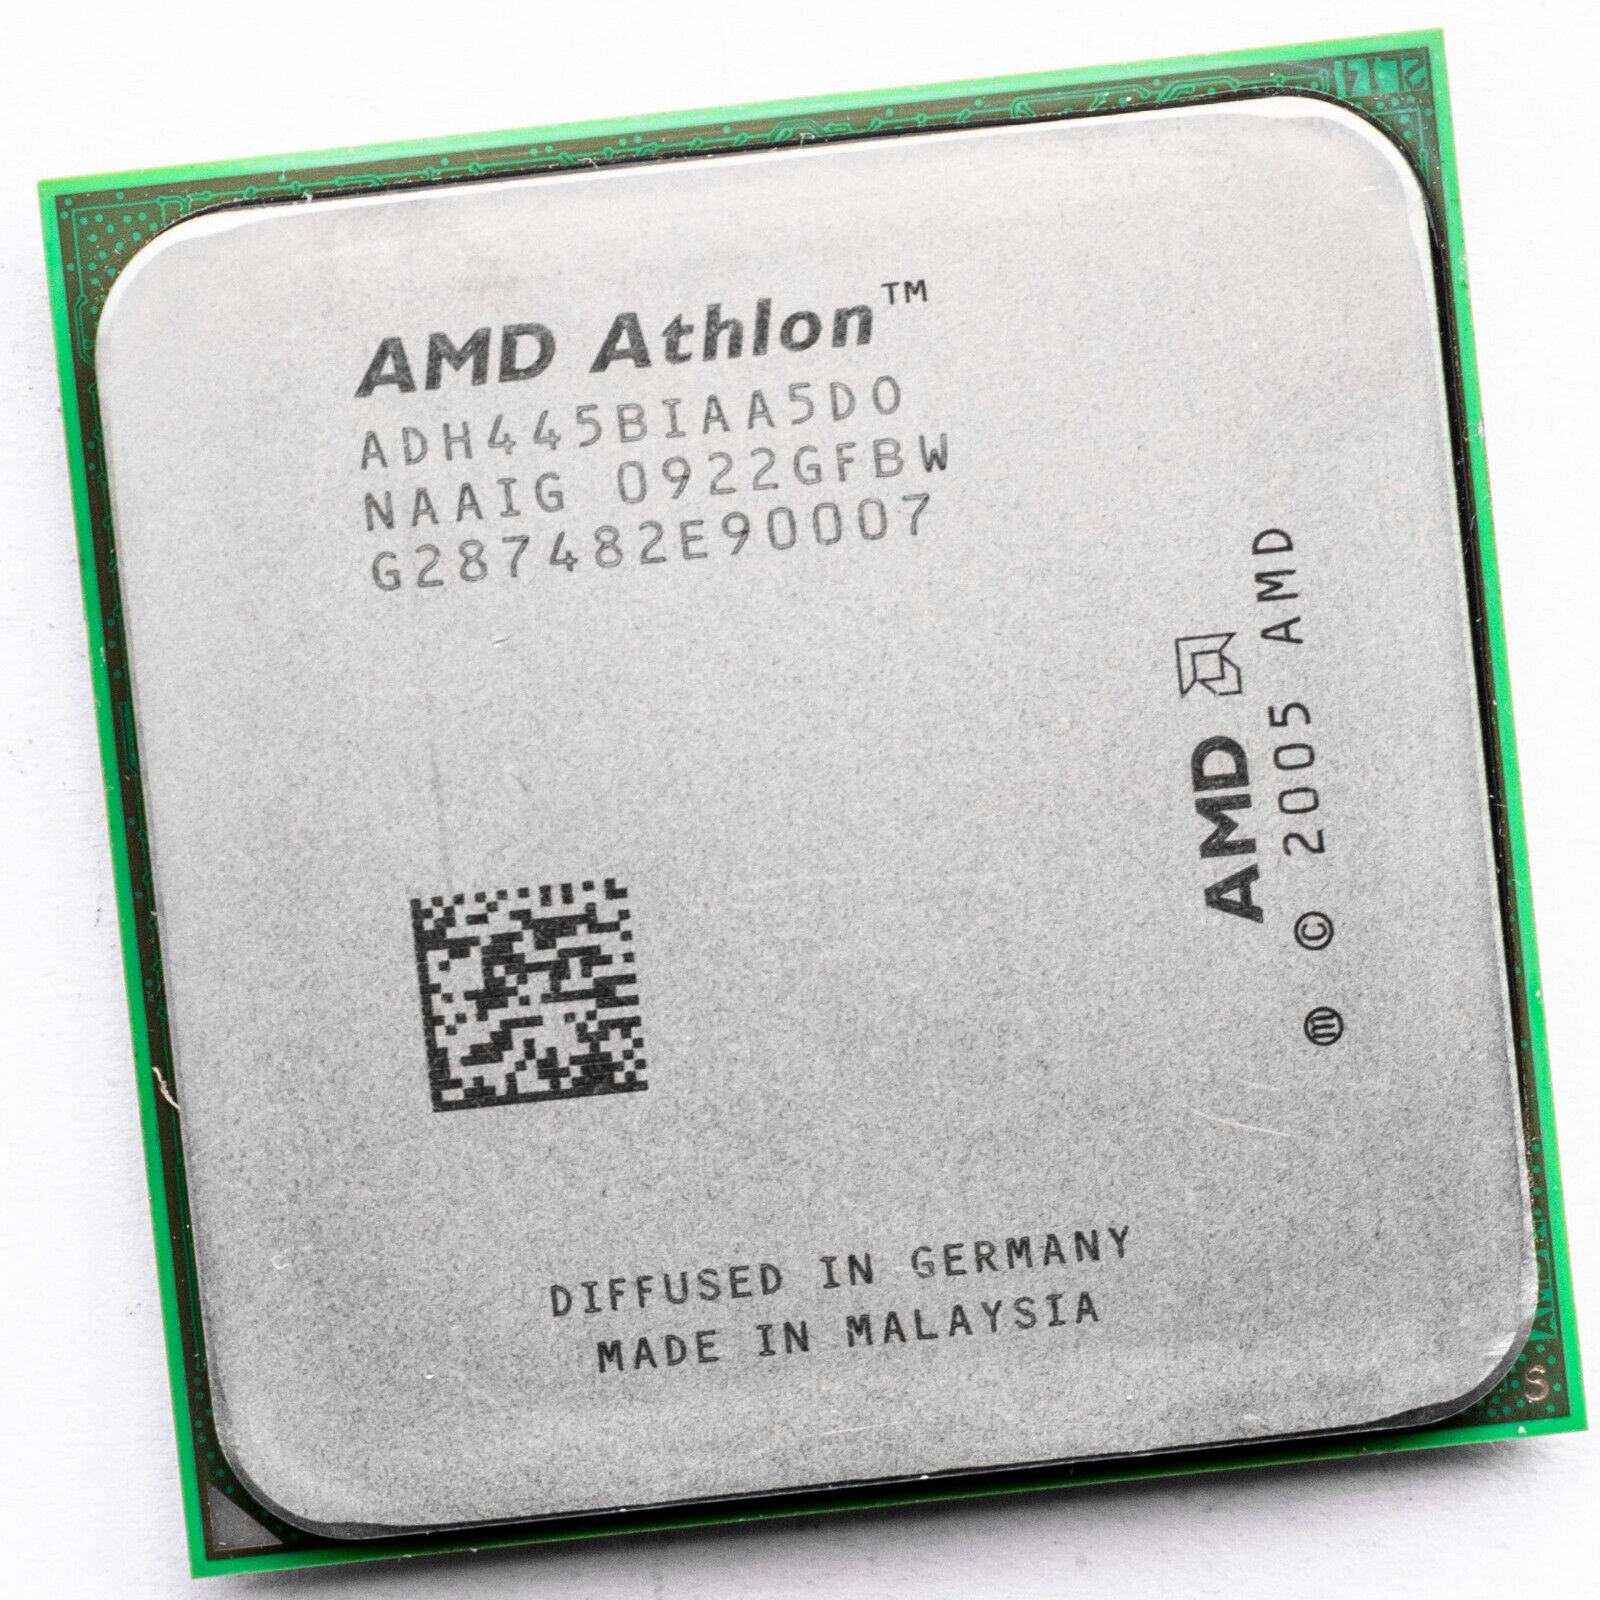 AMD Athlon X2 4450e ADH4450IAA5DO AM2 2.3GHz Dual Core 45W Processor Low TDP